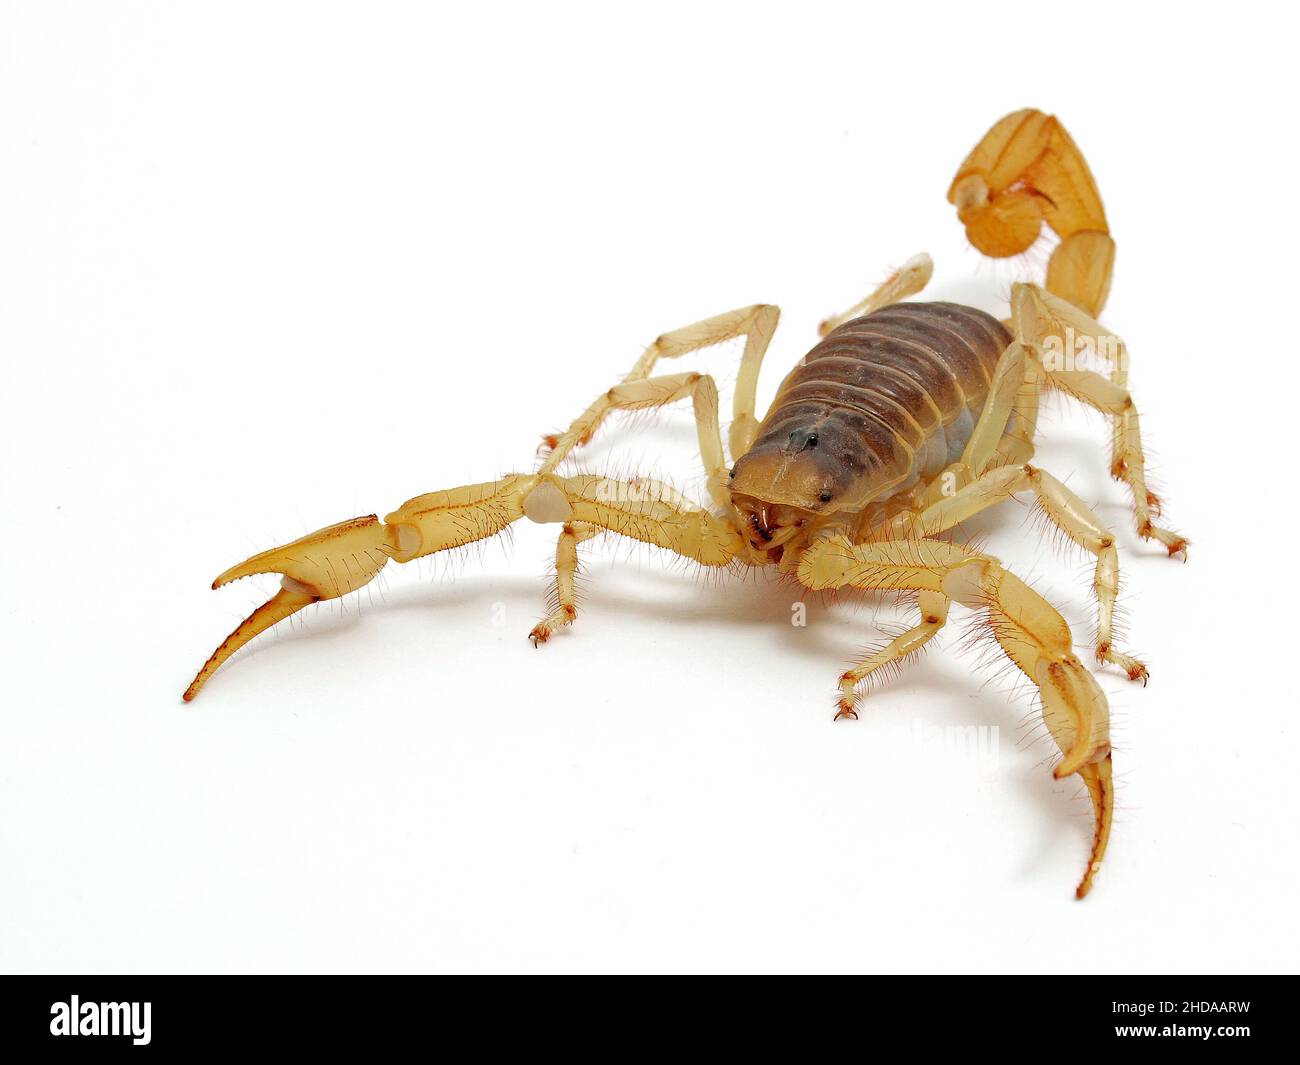 front view of a giant desert hairy scorpion, Hadrurus arizonensis, isolated, cECP 2012 Stock Photo